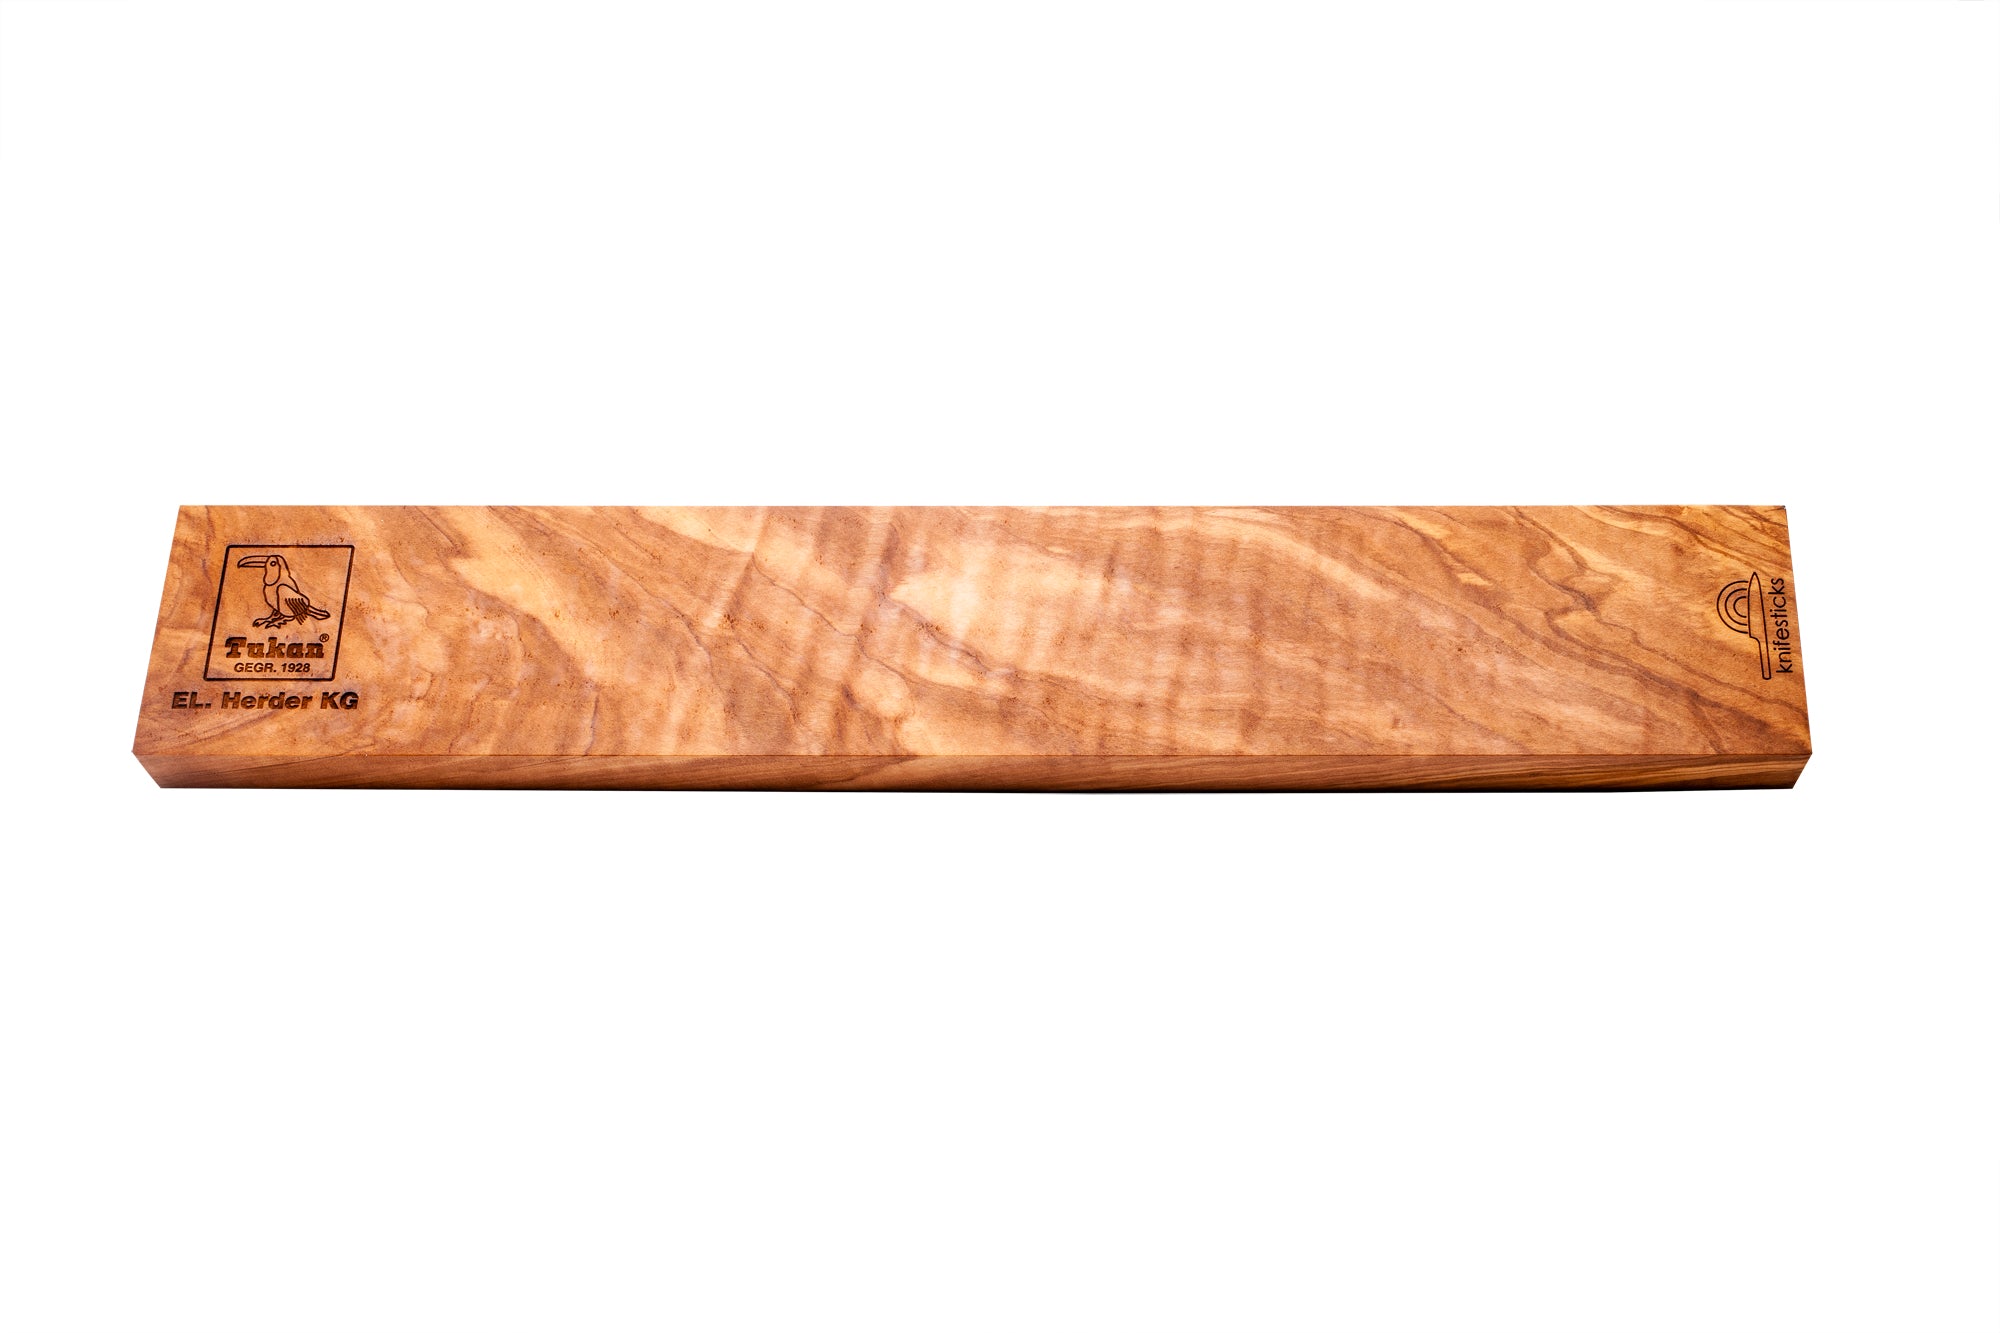 Knife set 6pcs. with magnetic bar, olive wood